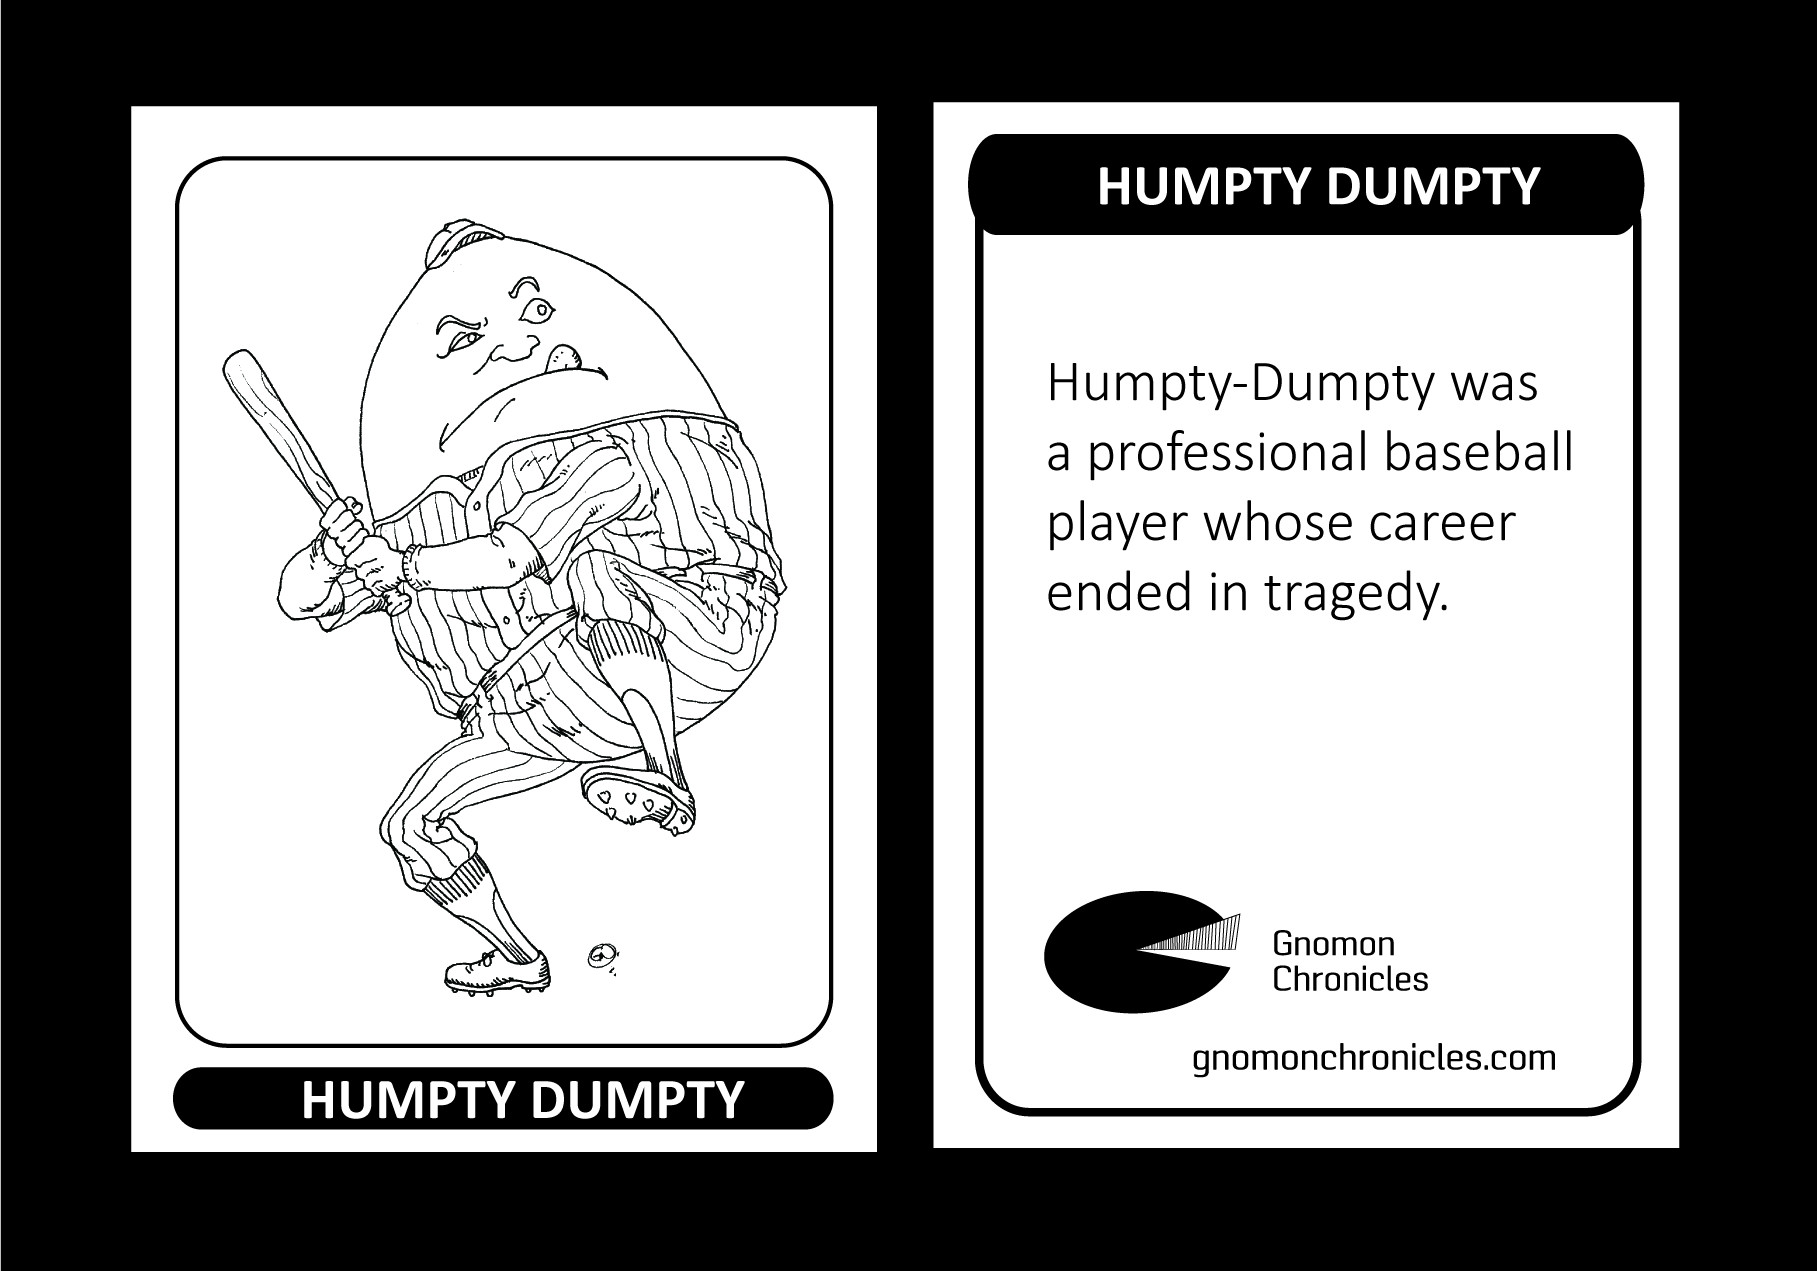 Humpty-Dumpty trading card.jpg